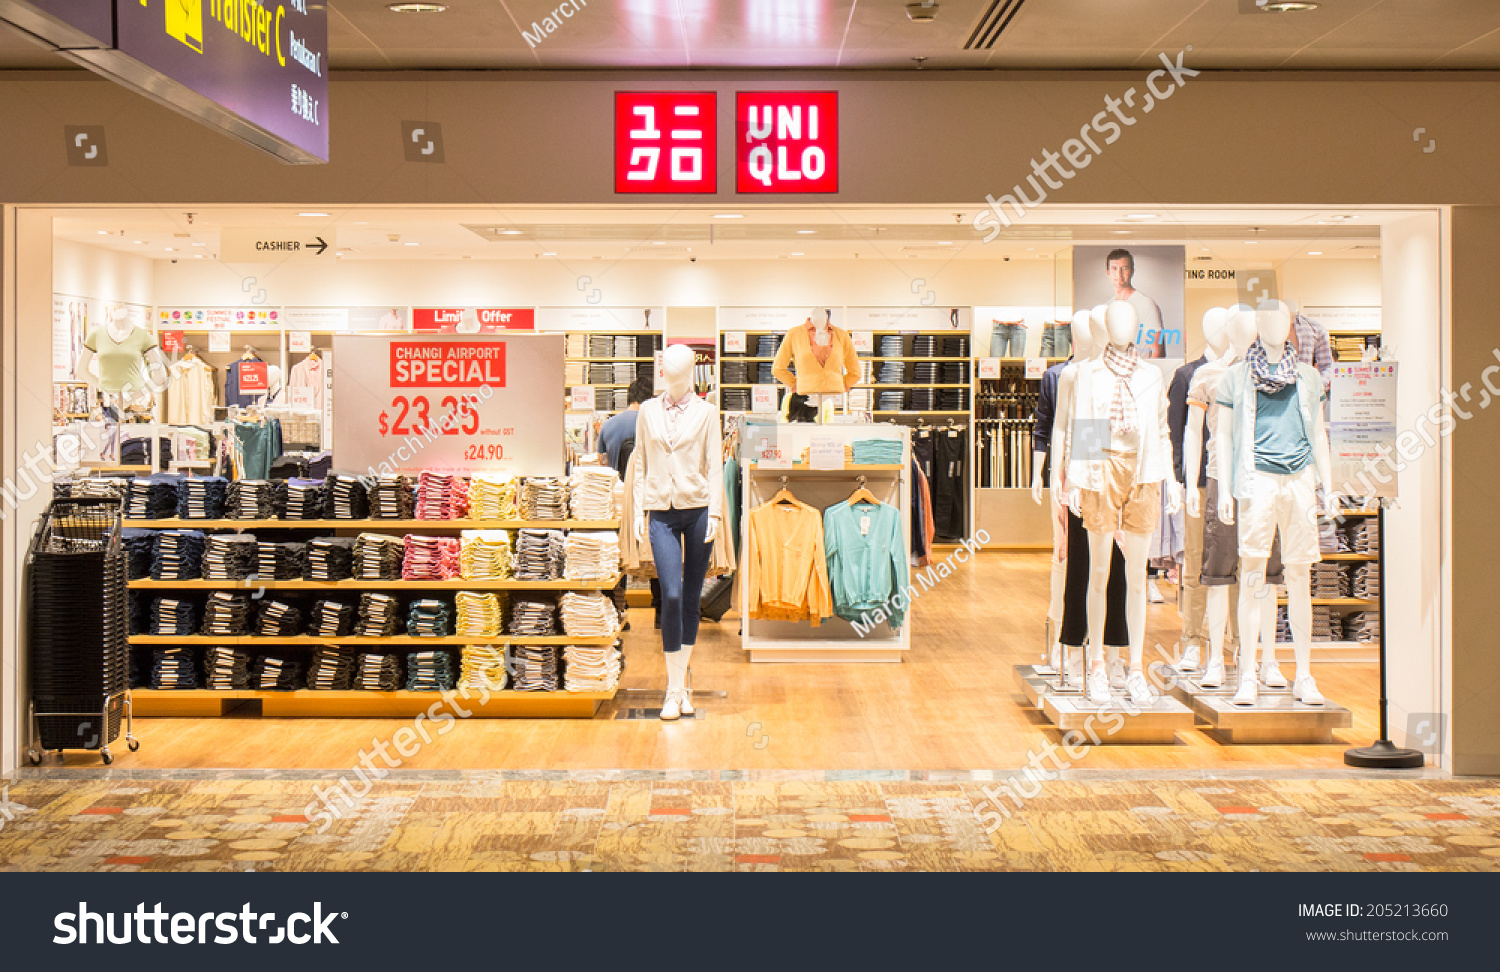 Singapore June 20 Uniqlo Store Changi Stock Photo 205213660 - Shutterstock